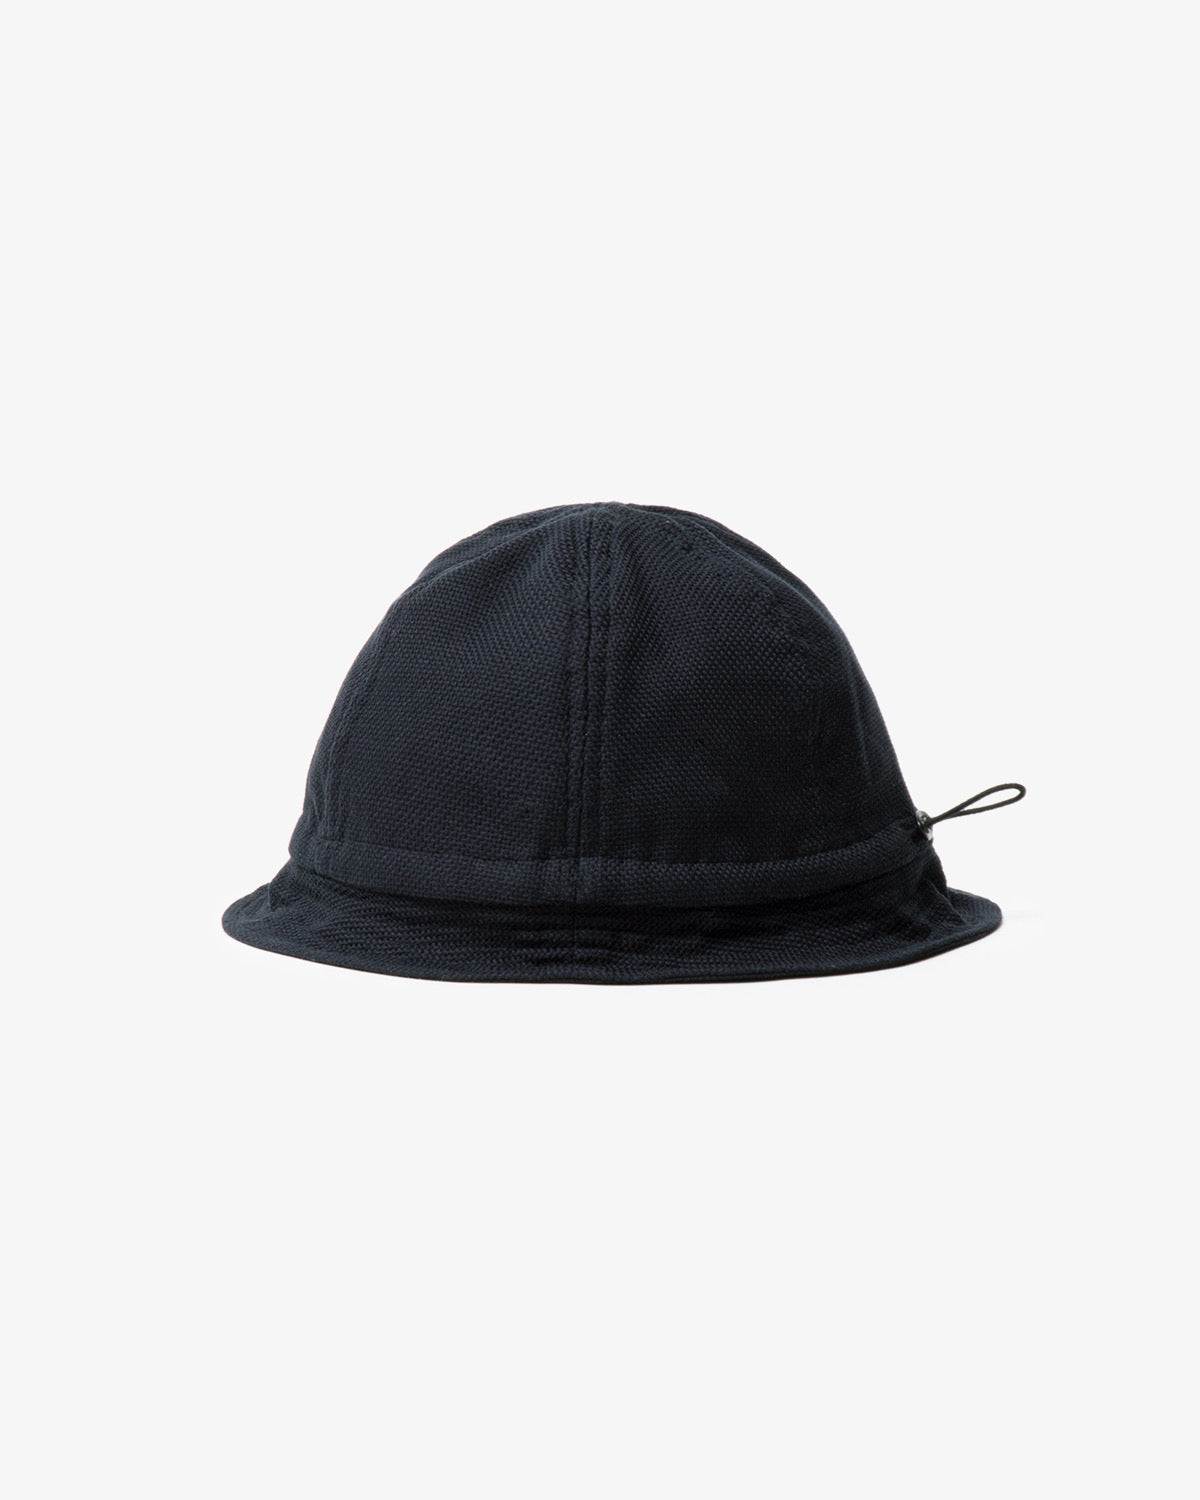 "BED HEAD HAT" - SASHIKO STYLE DOBBY CLOTH